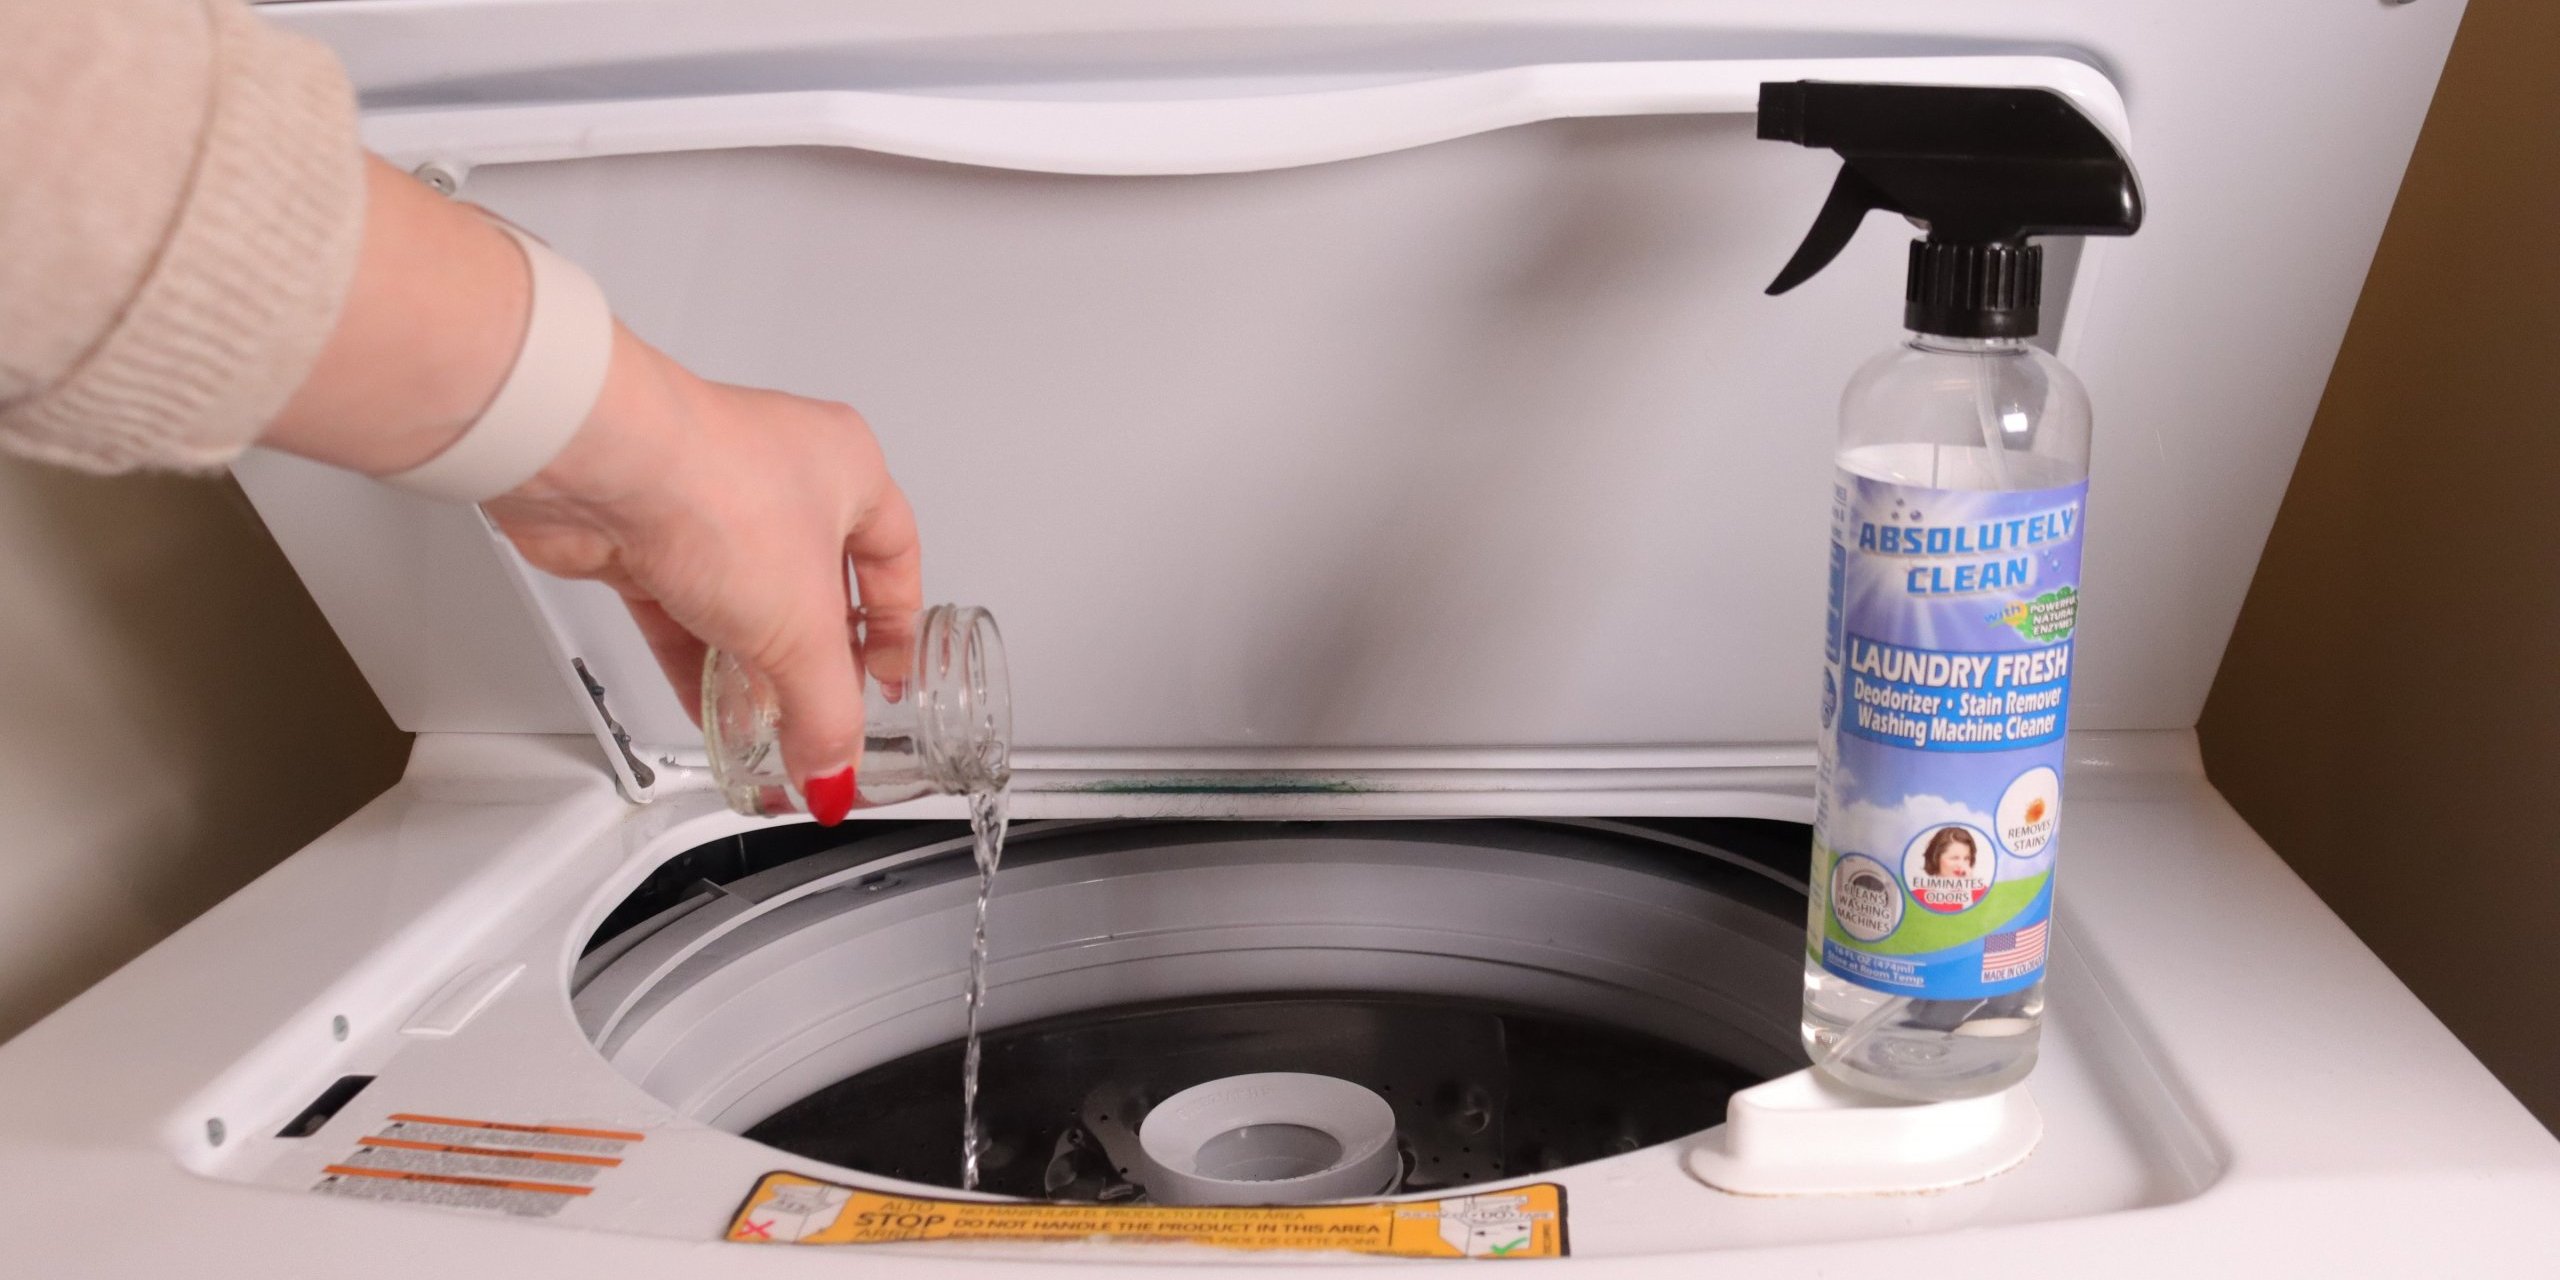 Best detergents for cat urine: Pretreating urine stains